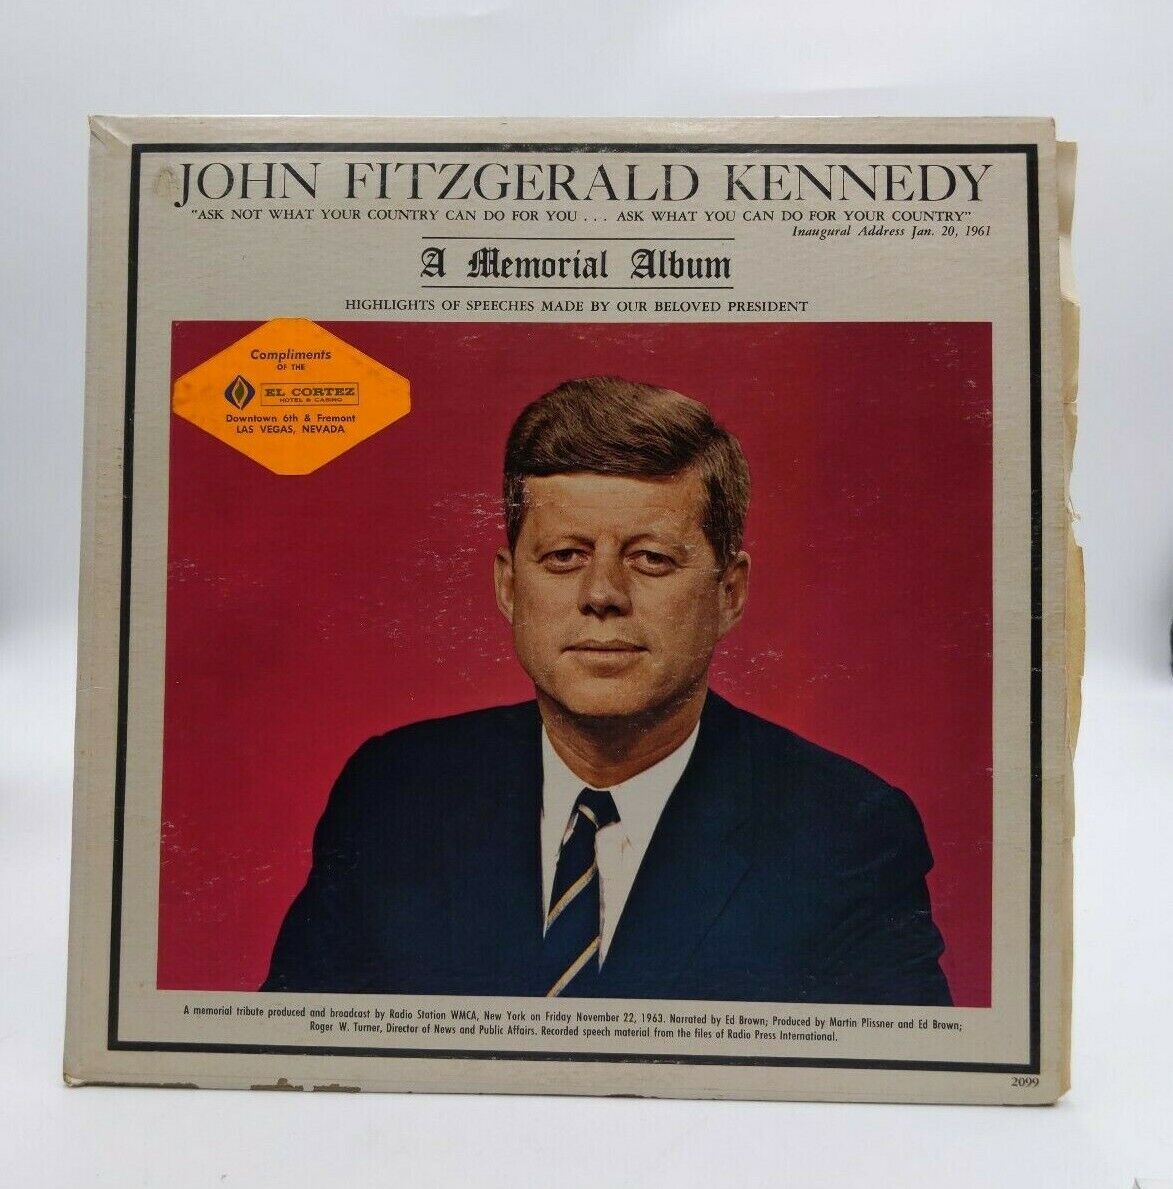 1963 Speeches John Fitzgerald Kennedy JFK A Memorial Tribute 33 RPM Record Album